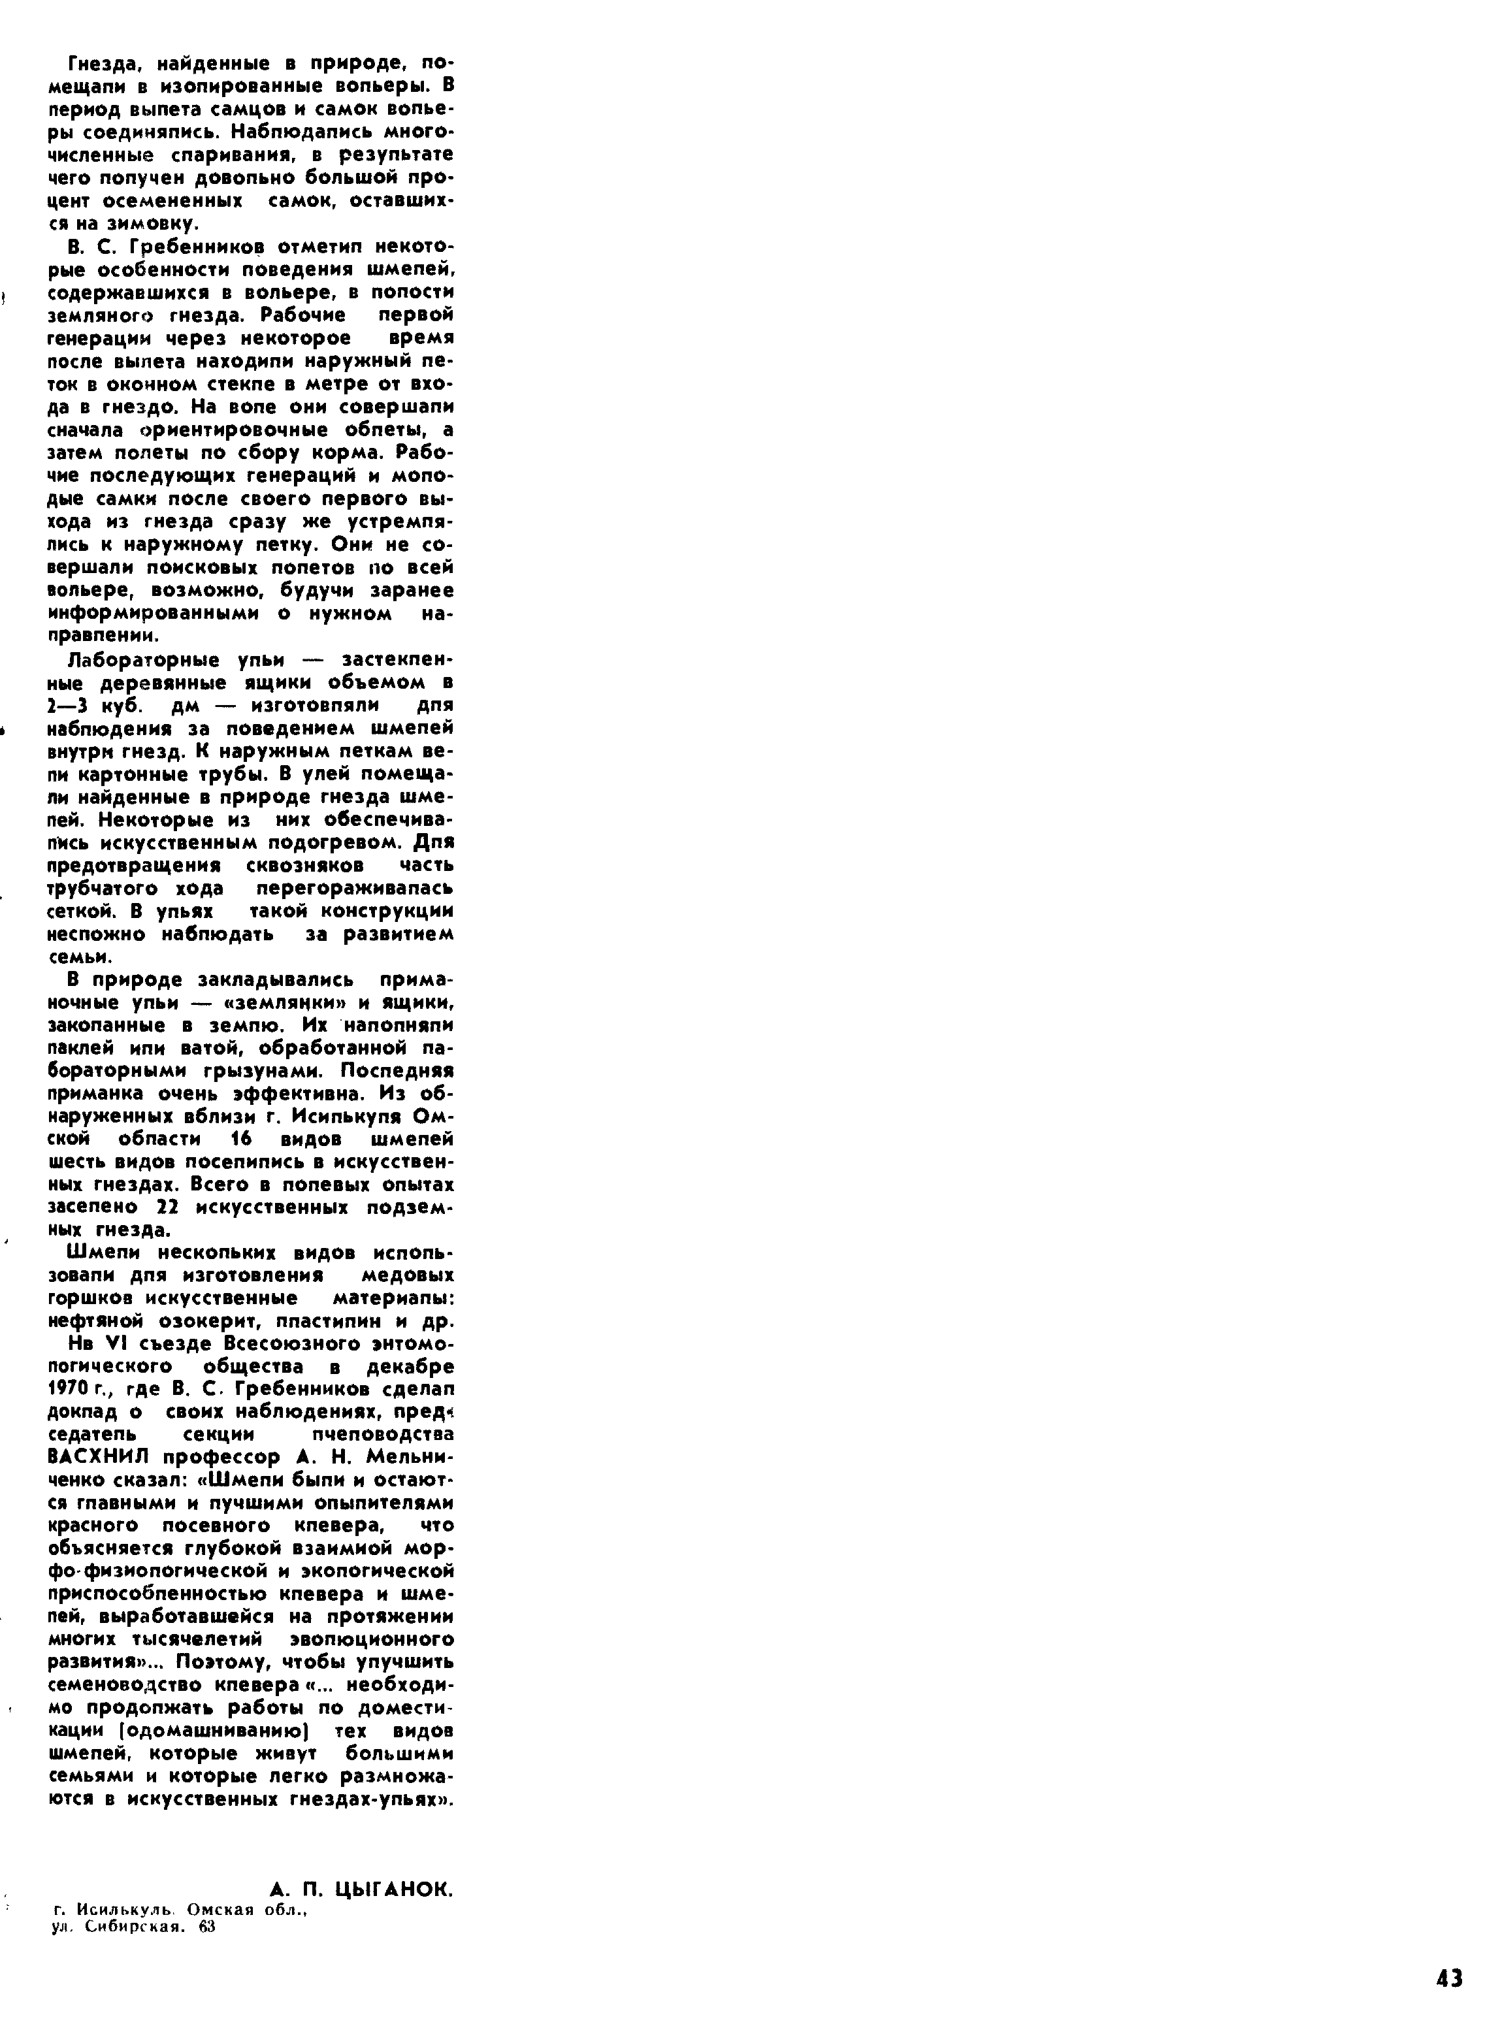 Шмели в лаборатории. А.П. Цыганок. Пчеловодство, 1971, №8, с.42. Фотокопия №2